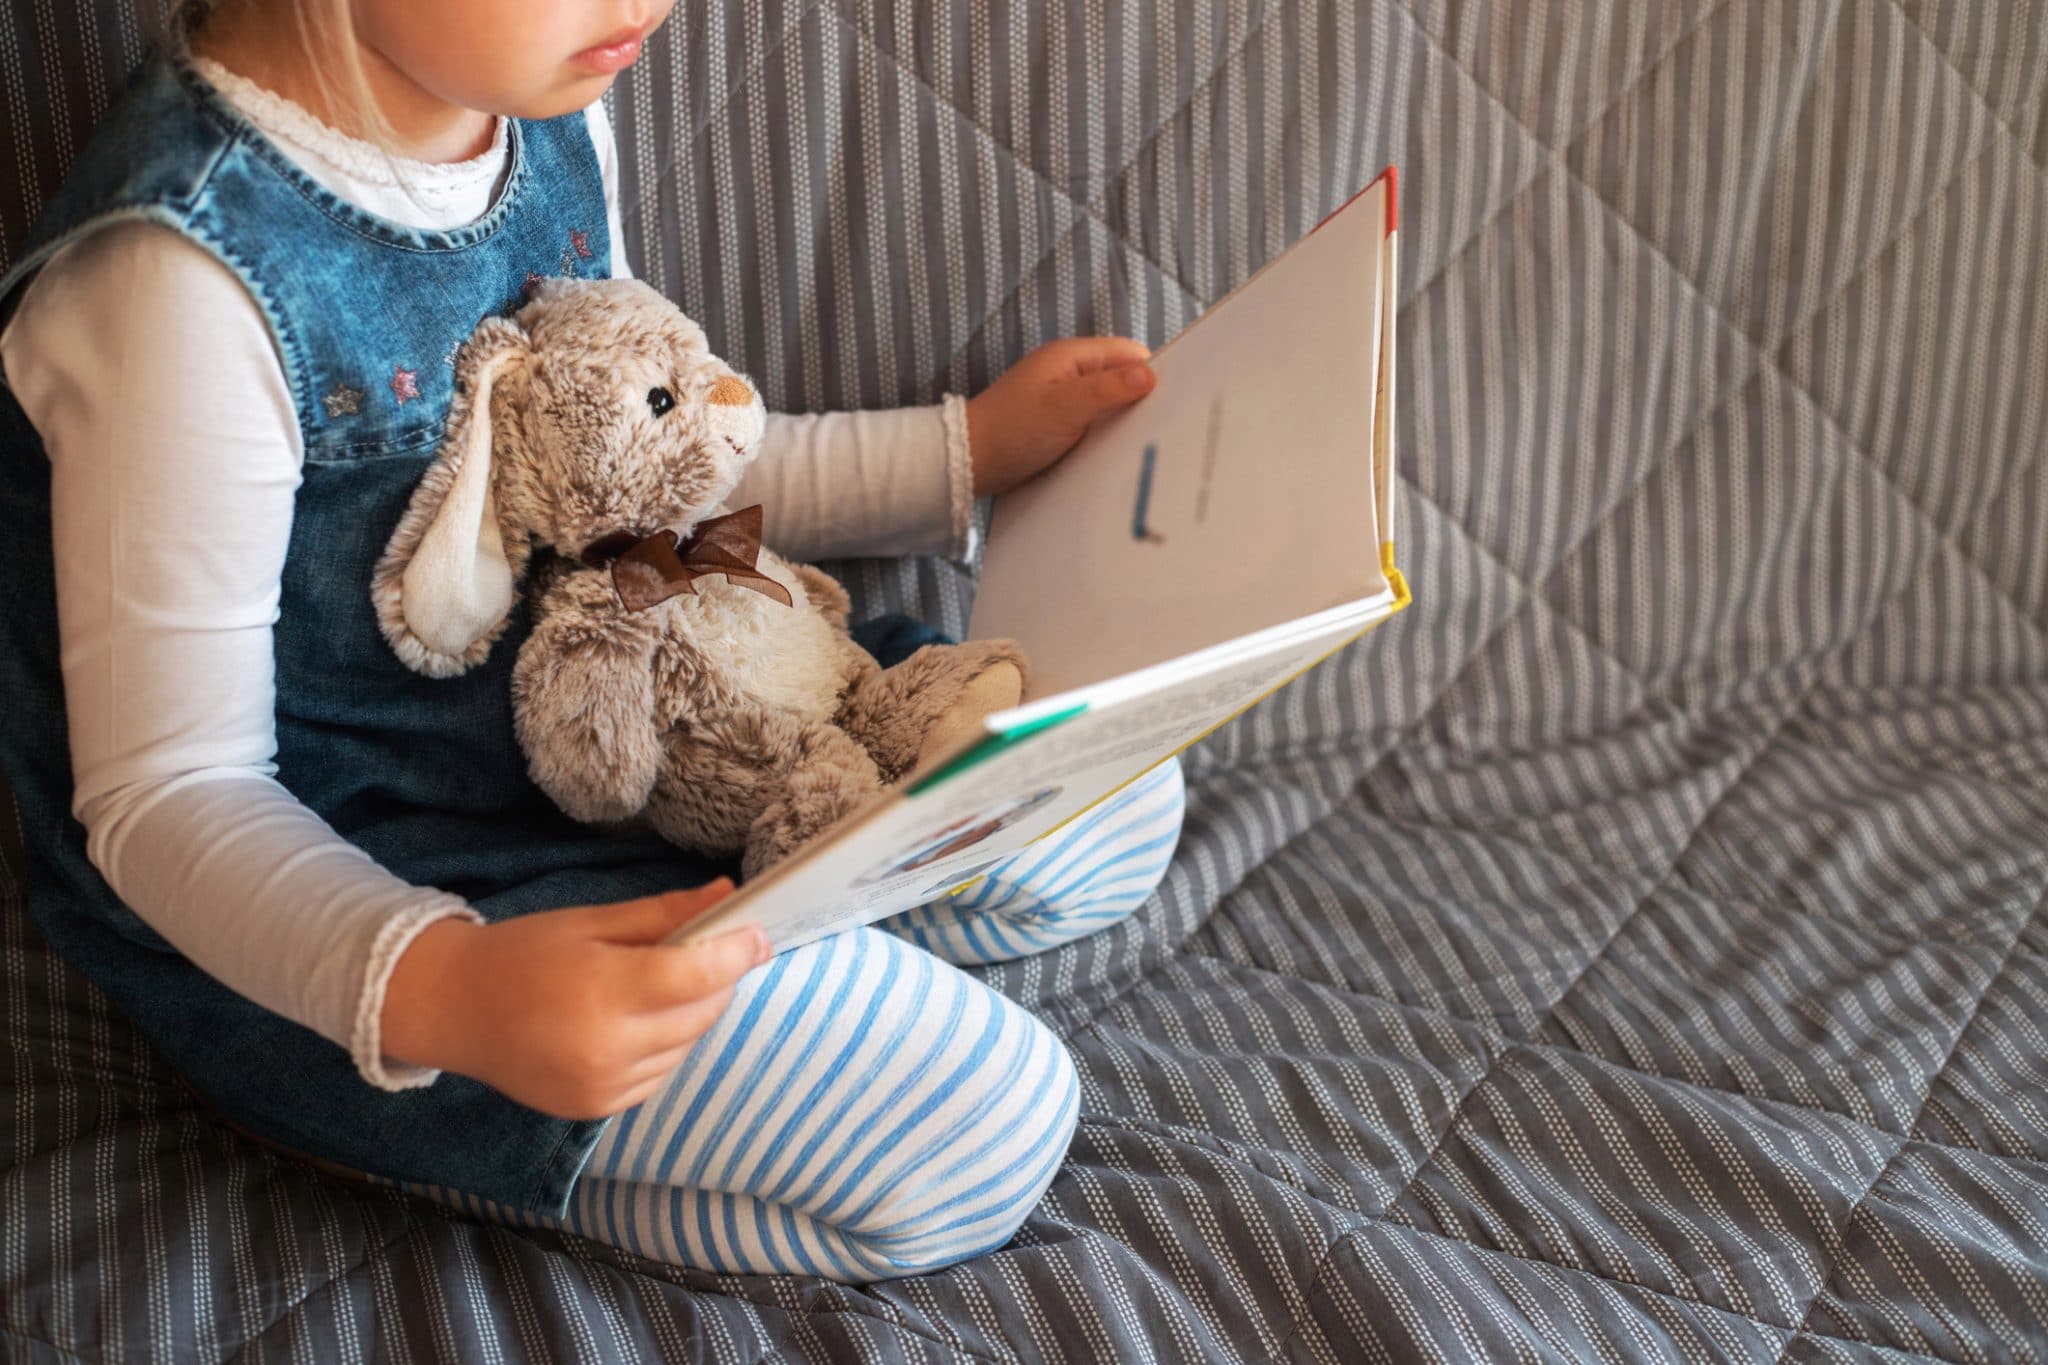 Child reading with stuffed animal